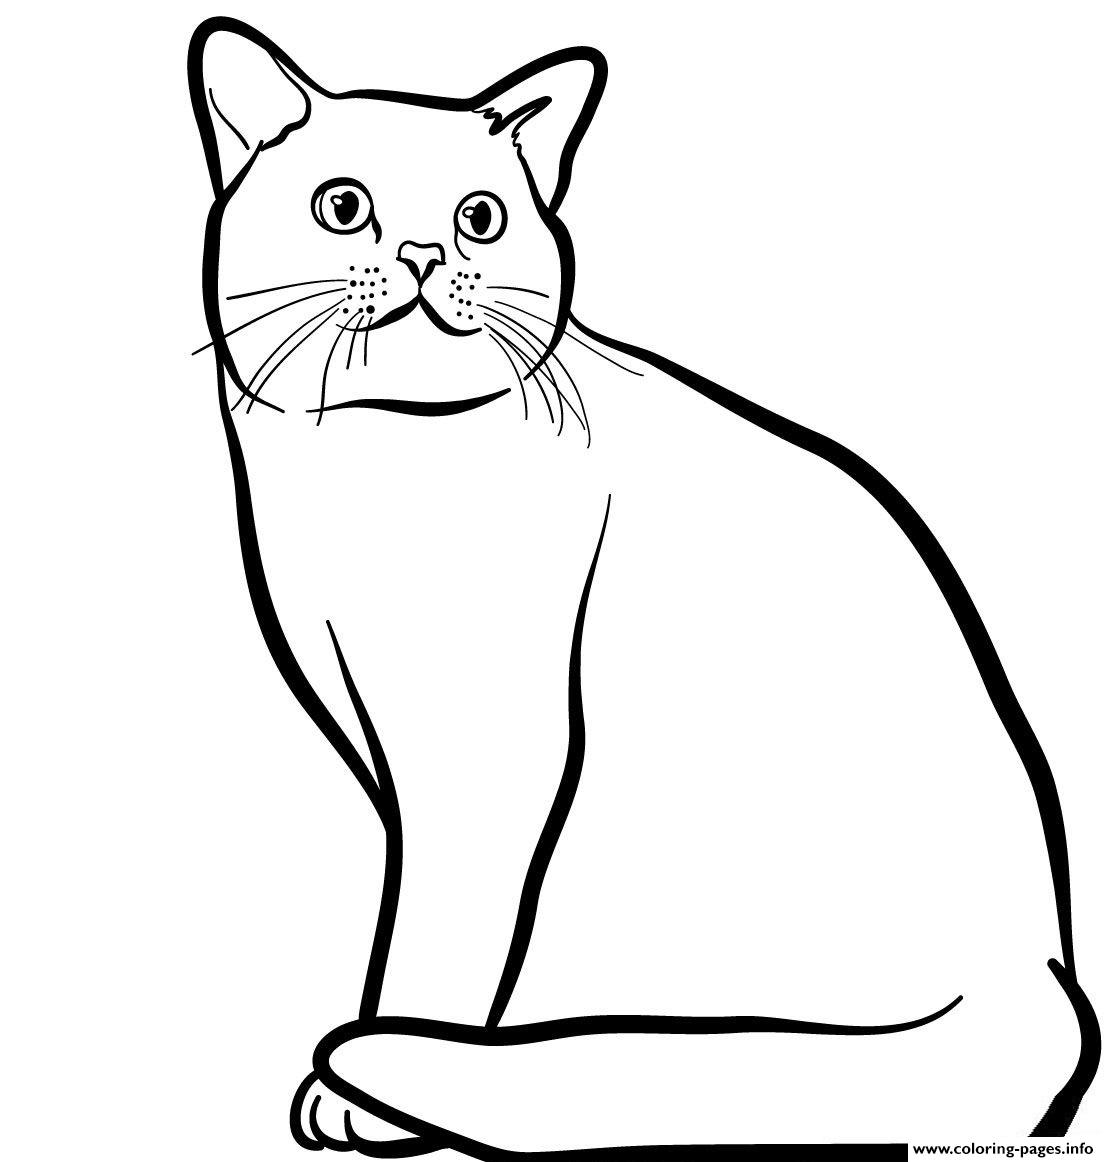 American Shorthair Cat coloring